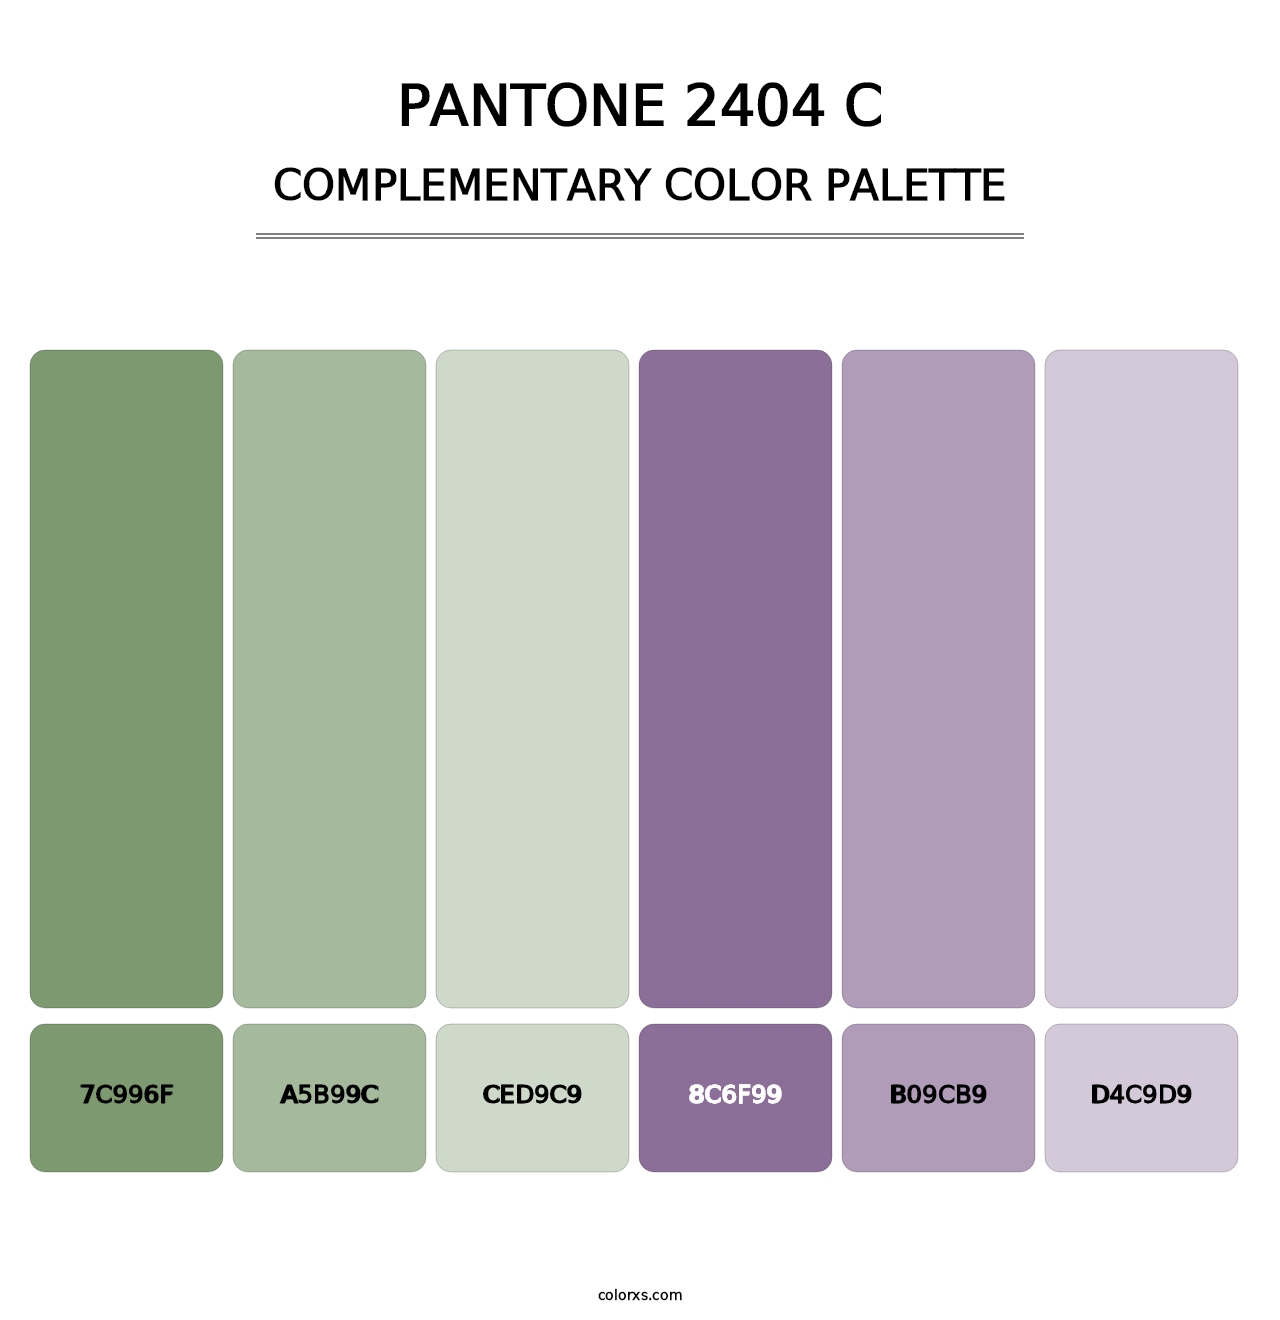 PANTONE 2404 C - Complementary Color Palette